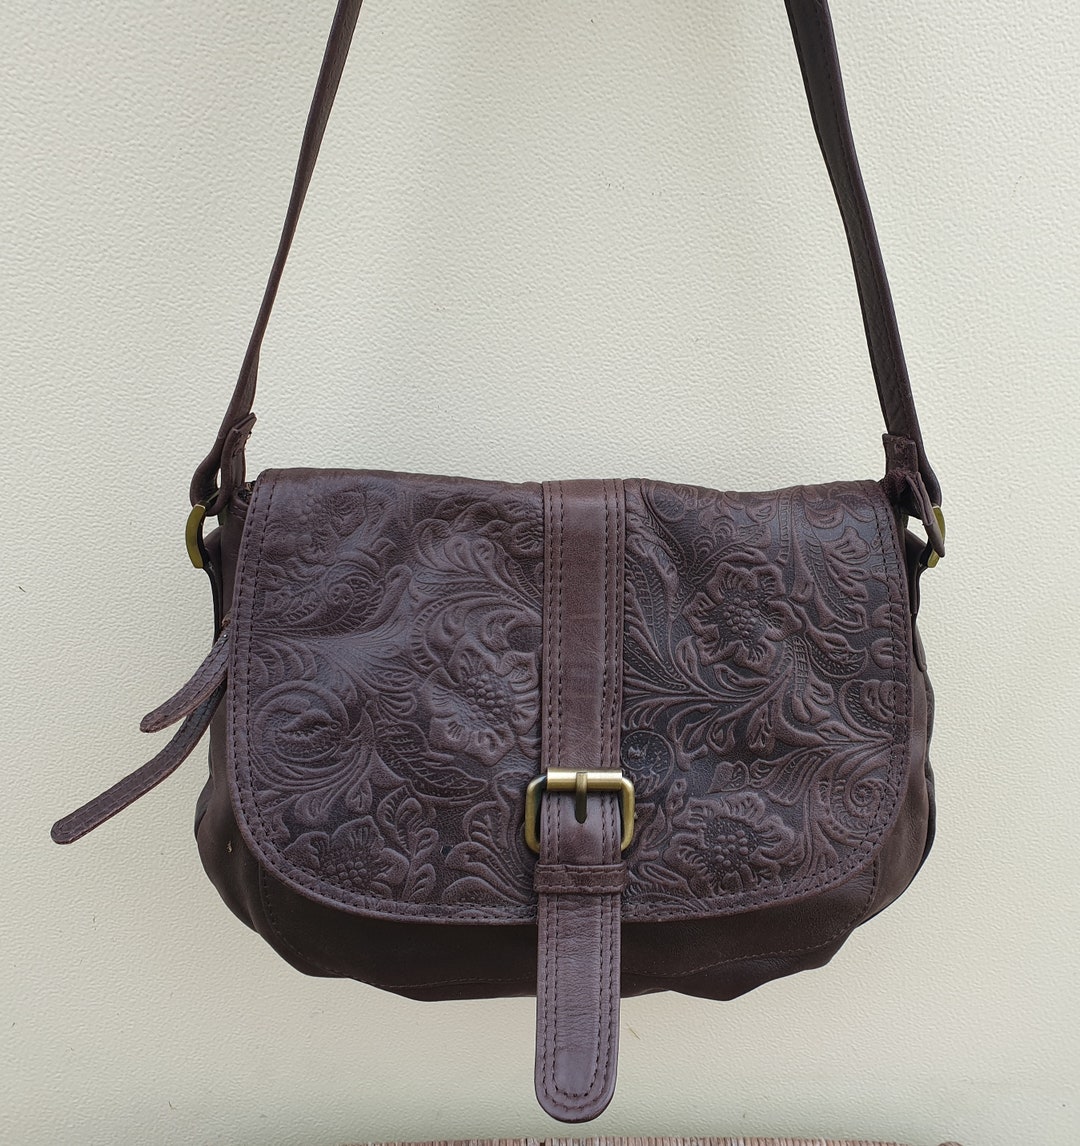 Rowallan Brown Leather Cross Body Messenger Bag Vintage - Etsy